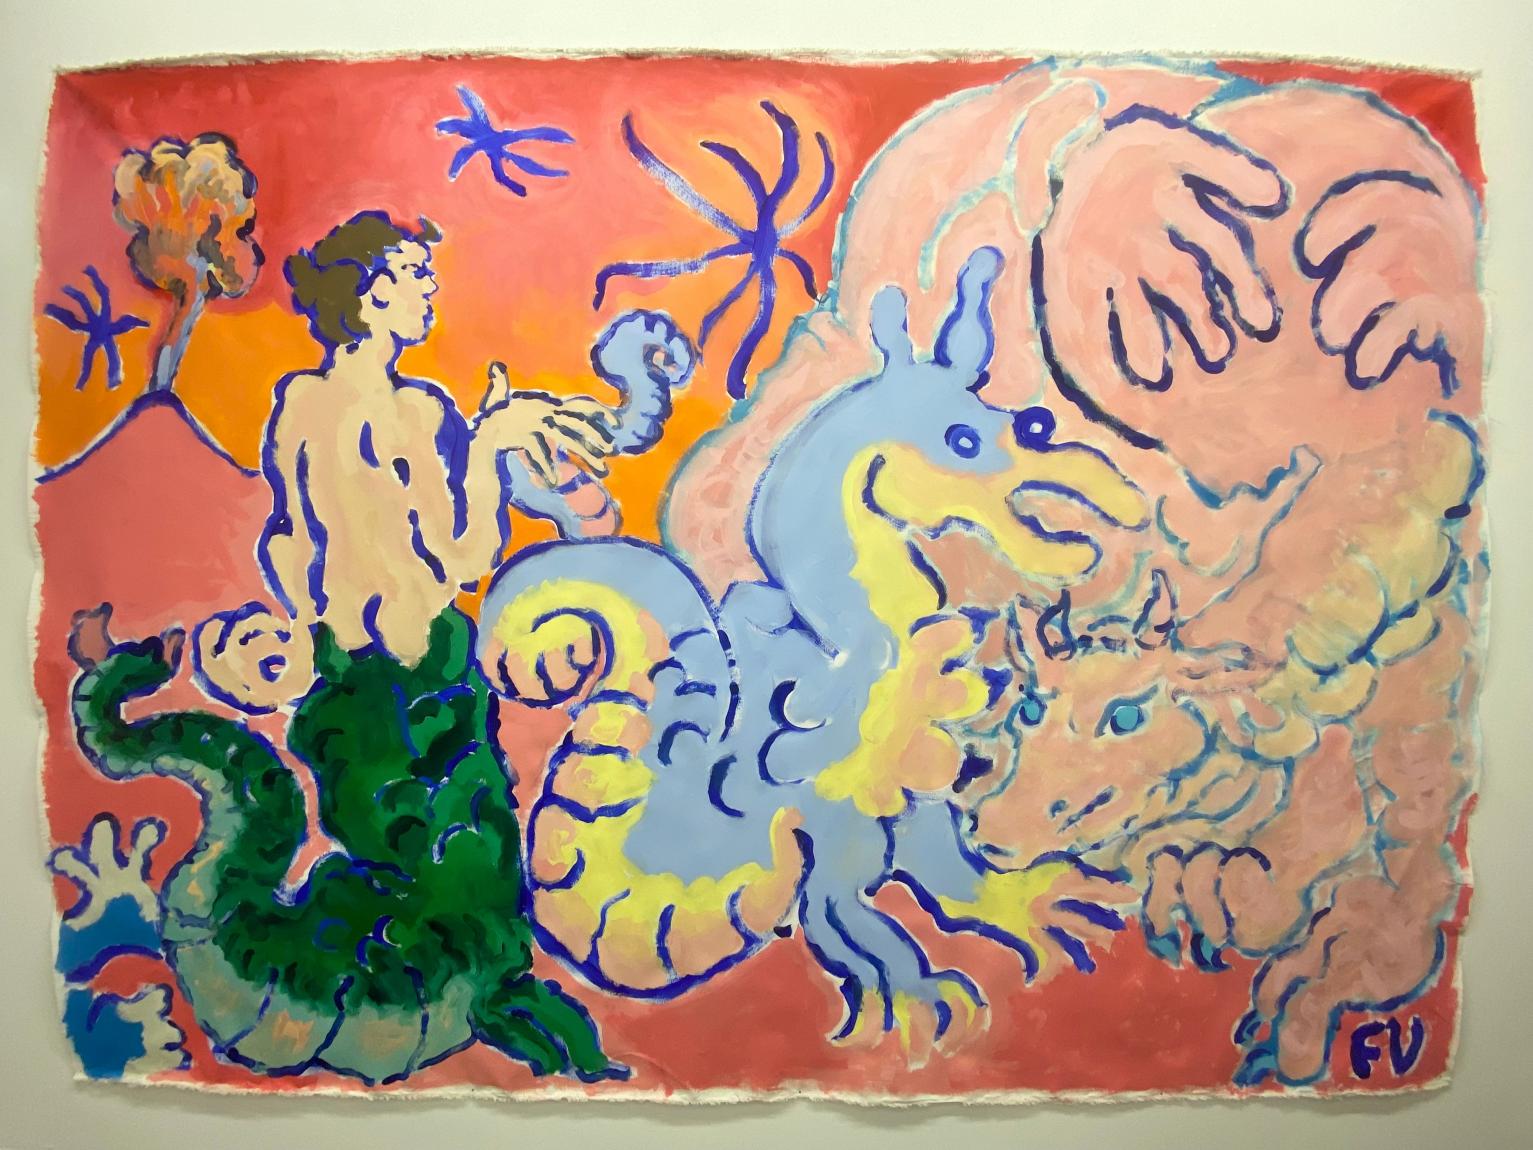 Flaminia Veronesi "Sirena e Drago", 2021, bei der Galerie Castiglioni aus Mailand